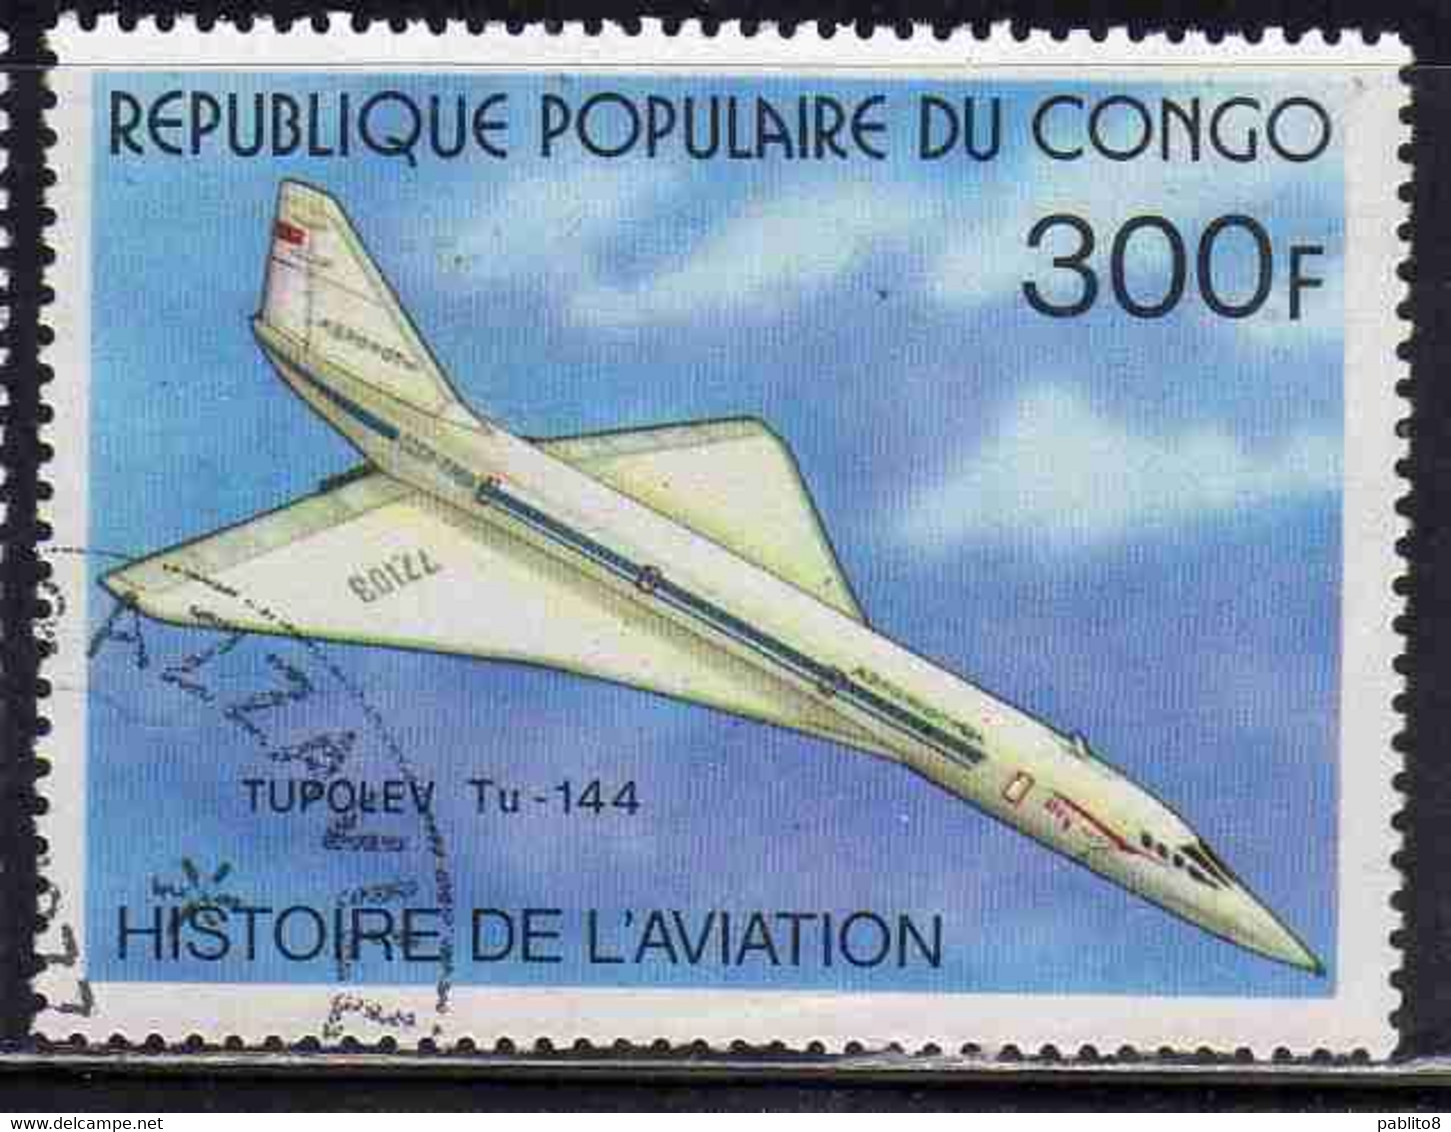 CONGO PEOPLE'S REPUBLIQUE REPUBLIC 1977 HISTORY OF AVIATION TUPOLEV TU-144 300fr OBLITERE' USED USATO - Oblitérés